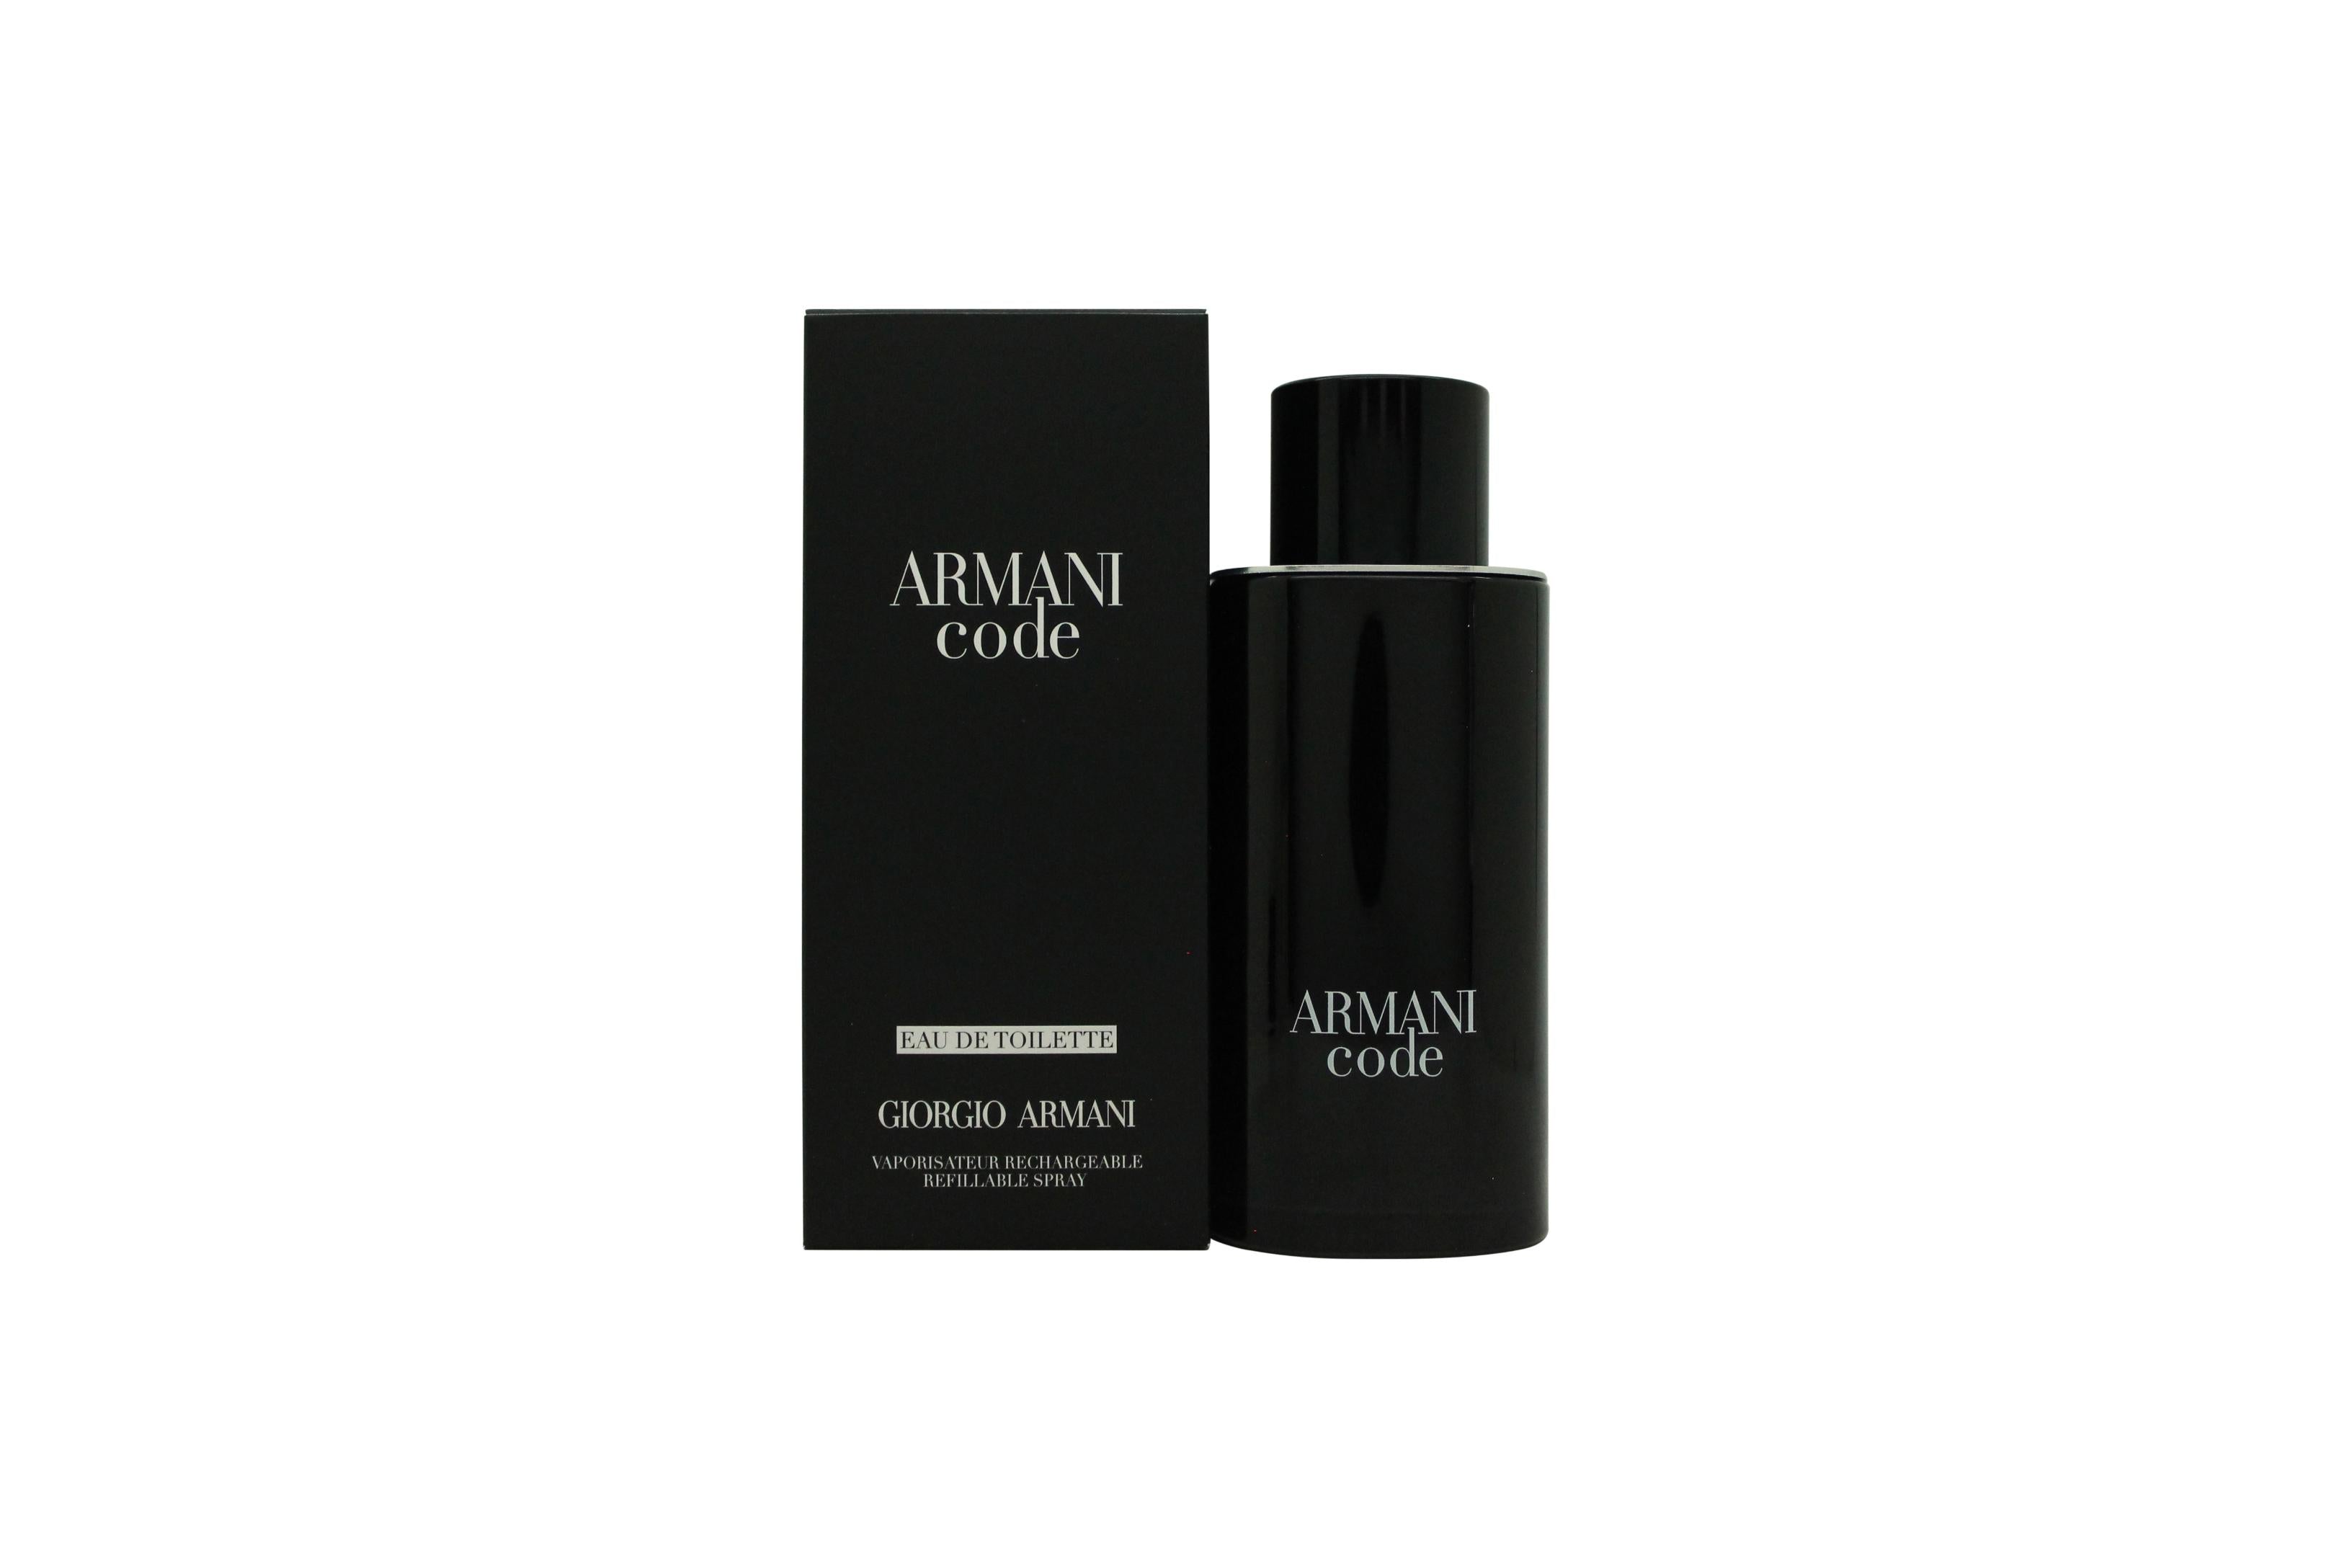 View Giorgio Armani Armani Code Eau de Toilette 125ml Refillable Spray information